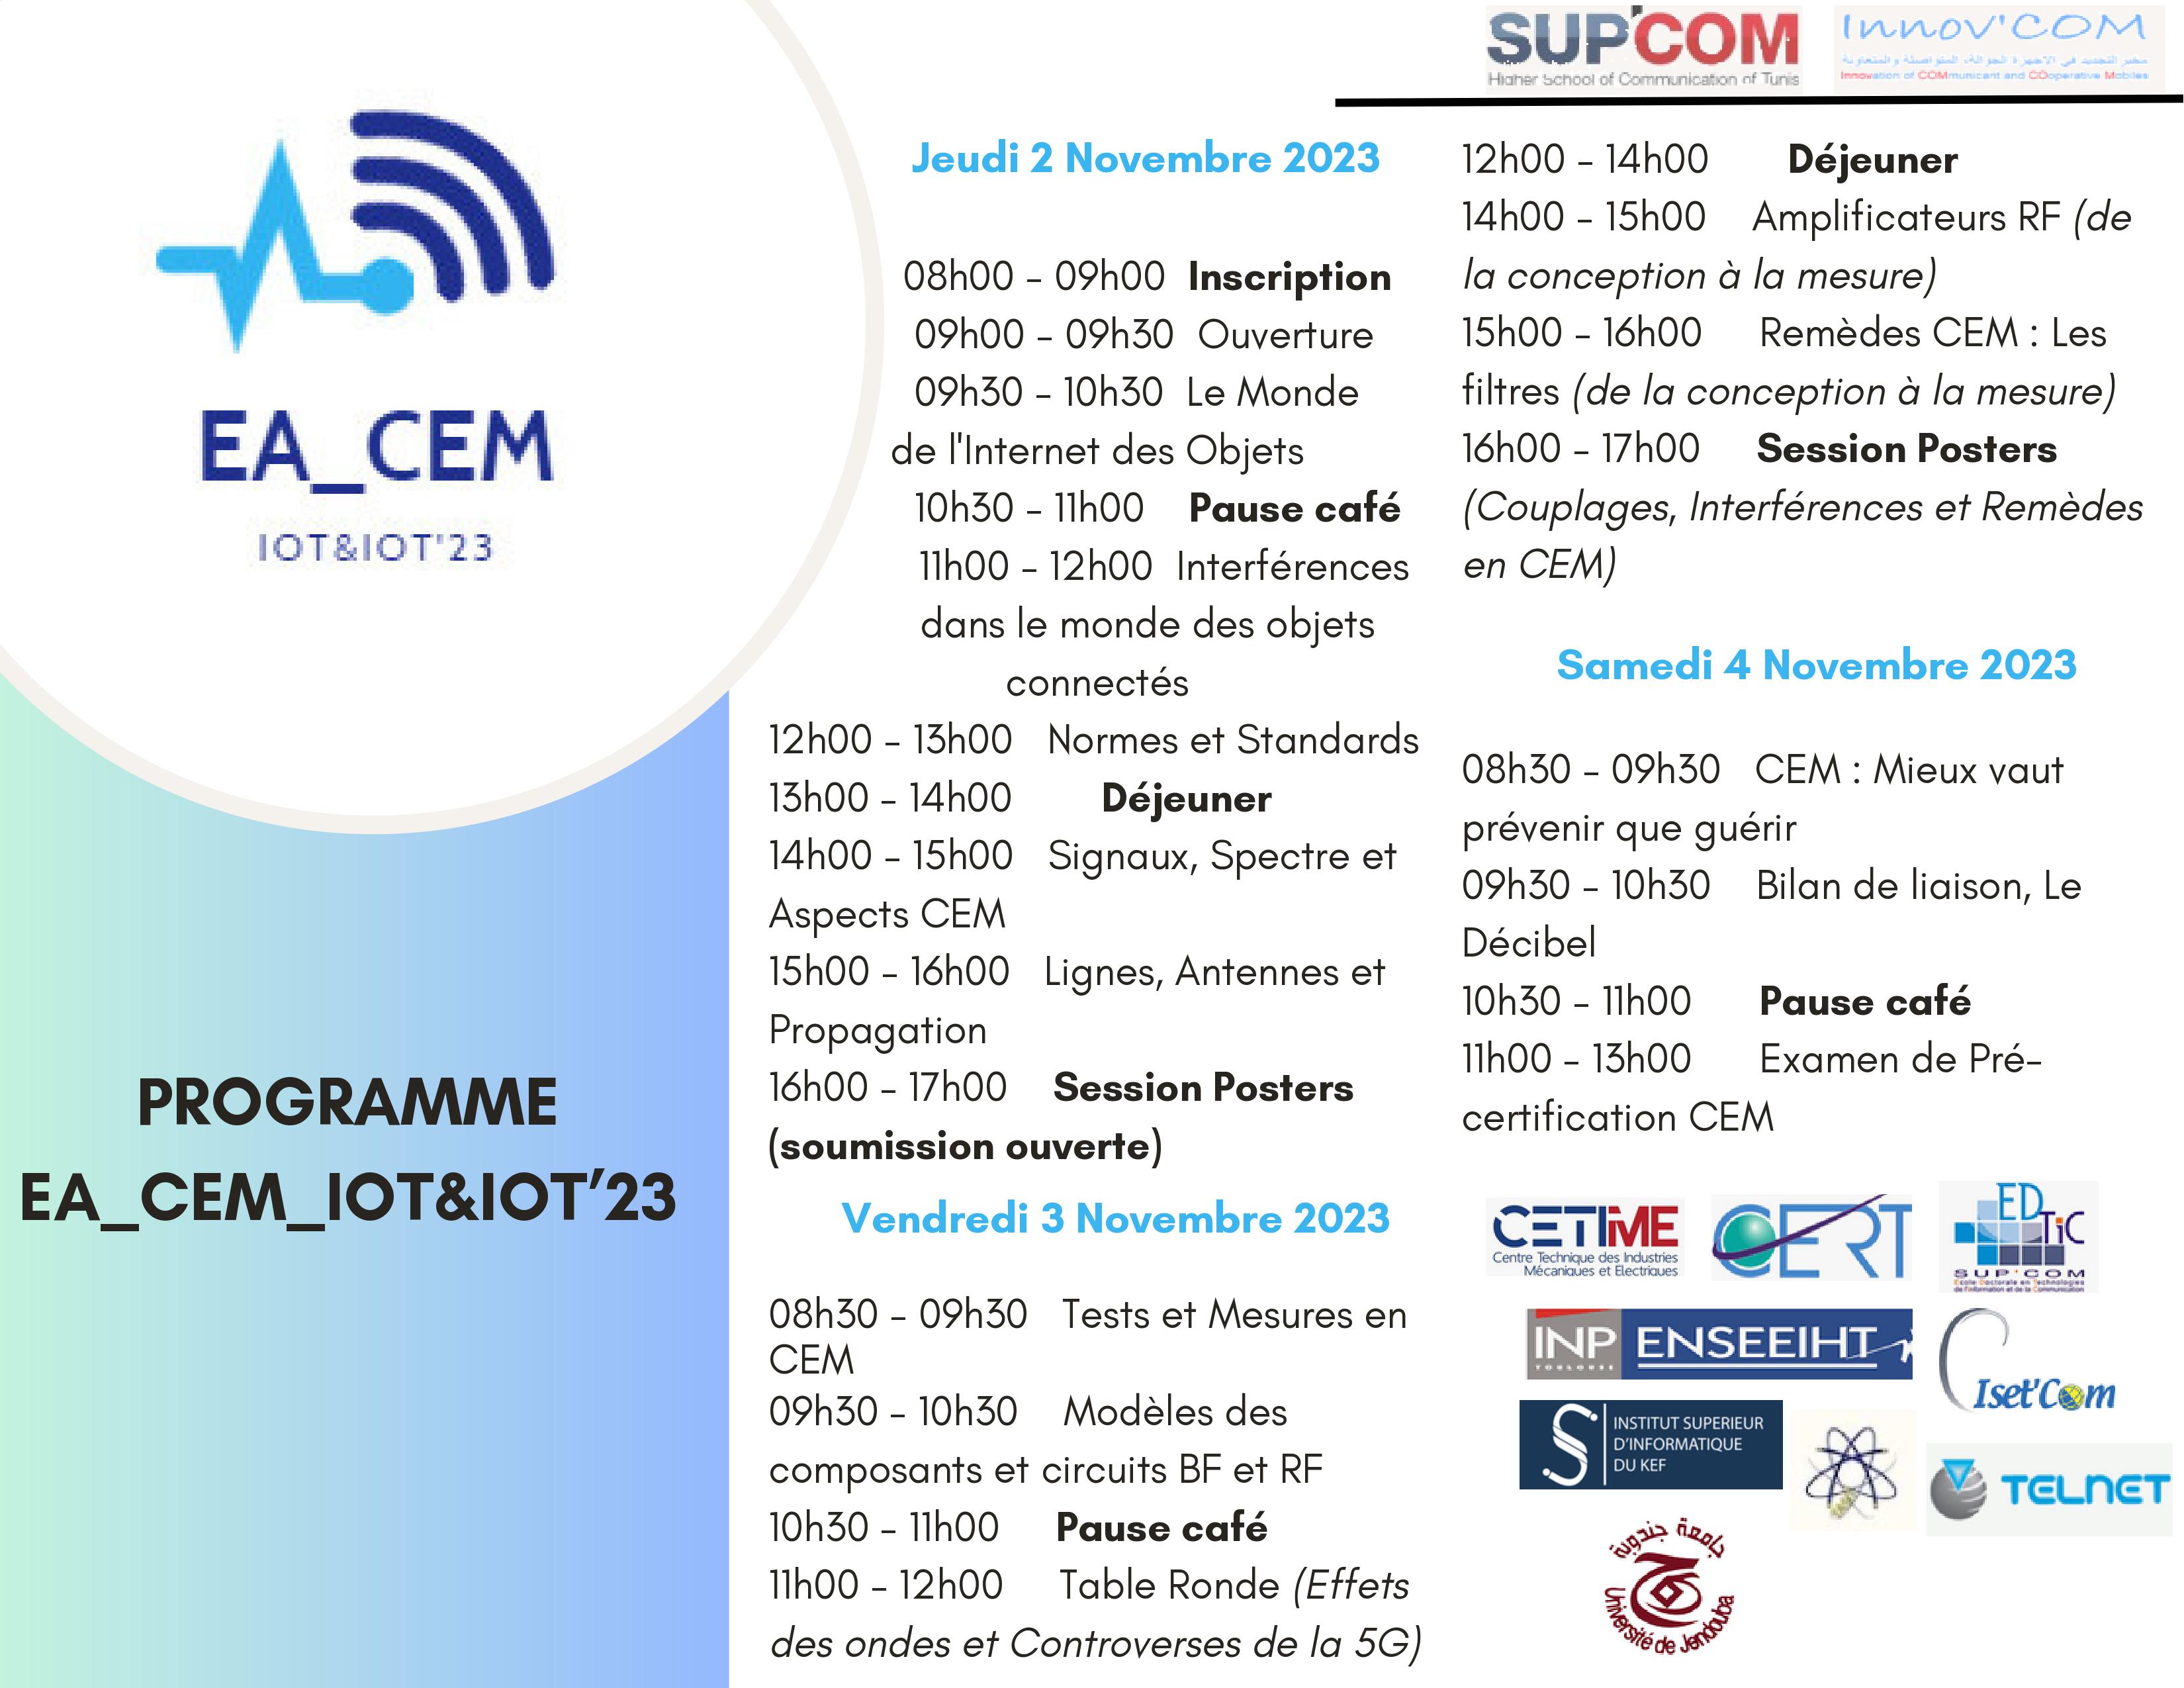 brochure+programme_EA_CEM_IoT&IOT'23-2.jpg